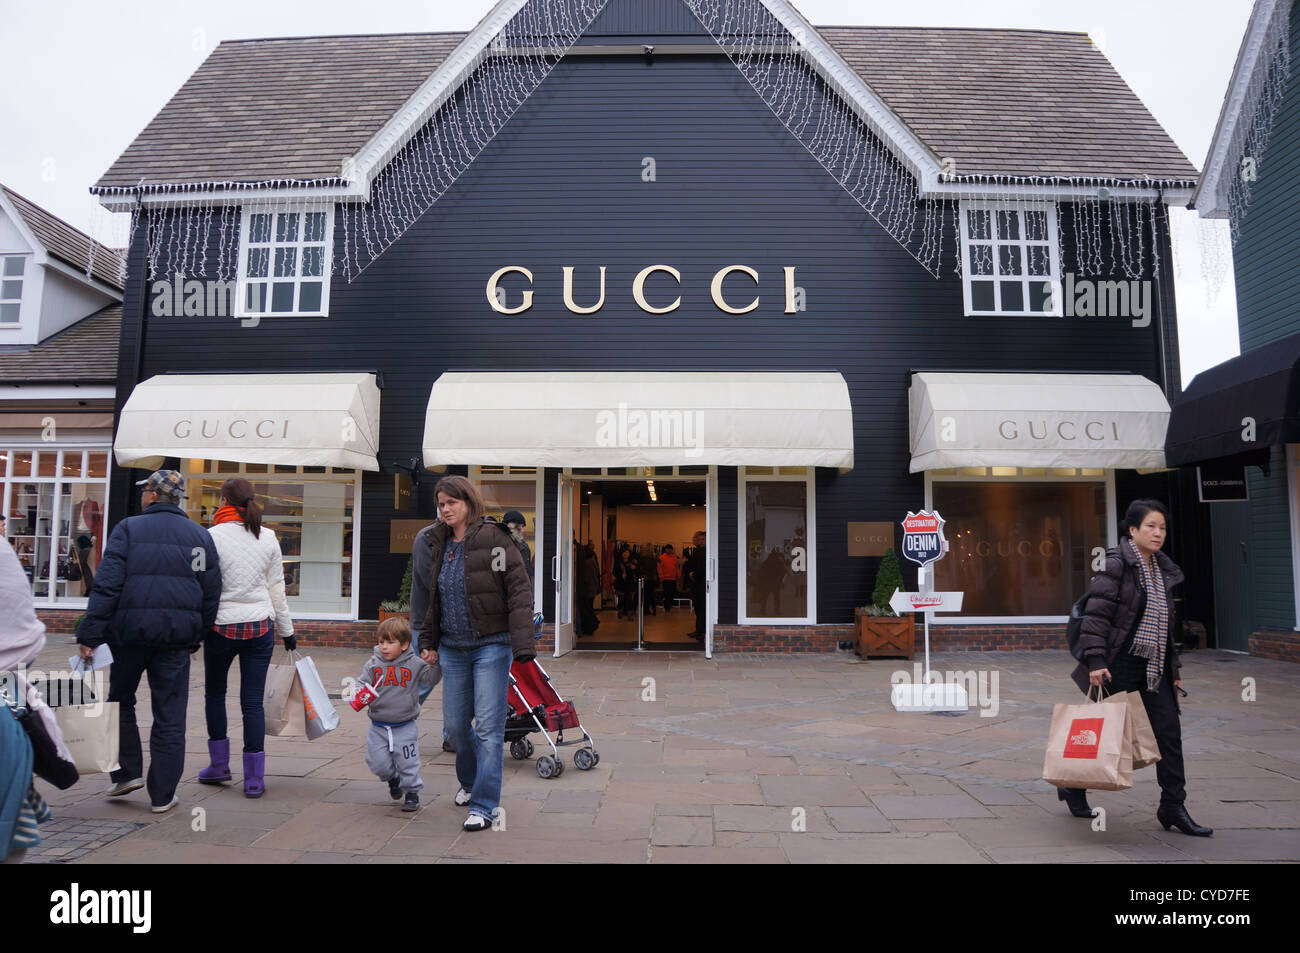 Gucci compnay shop at bicester village, uk Stock Photo - Alamy